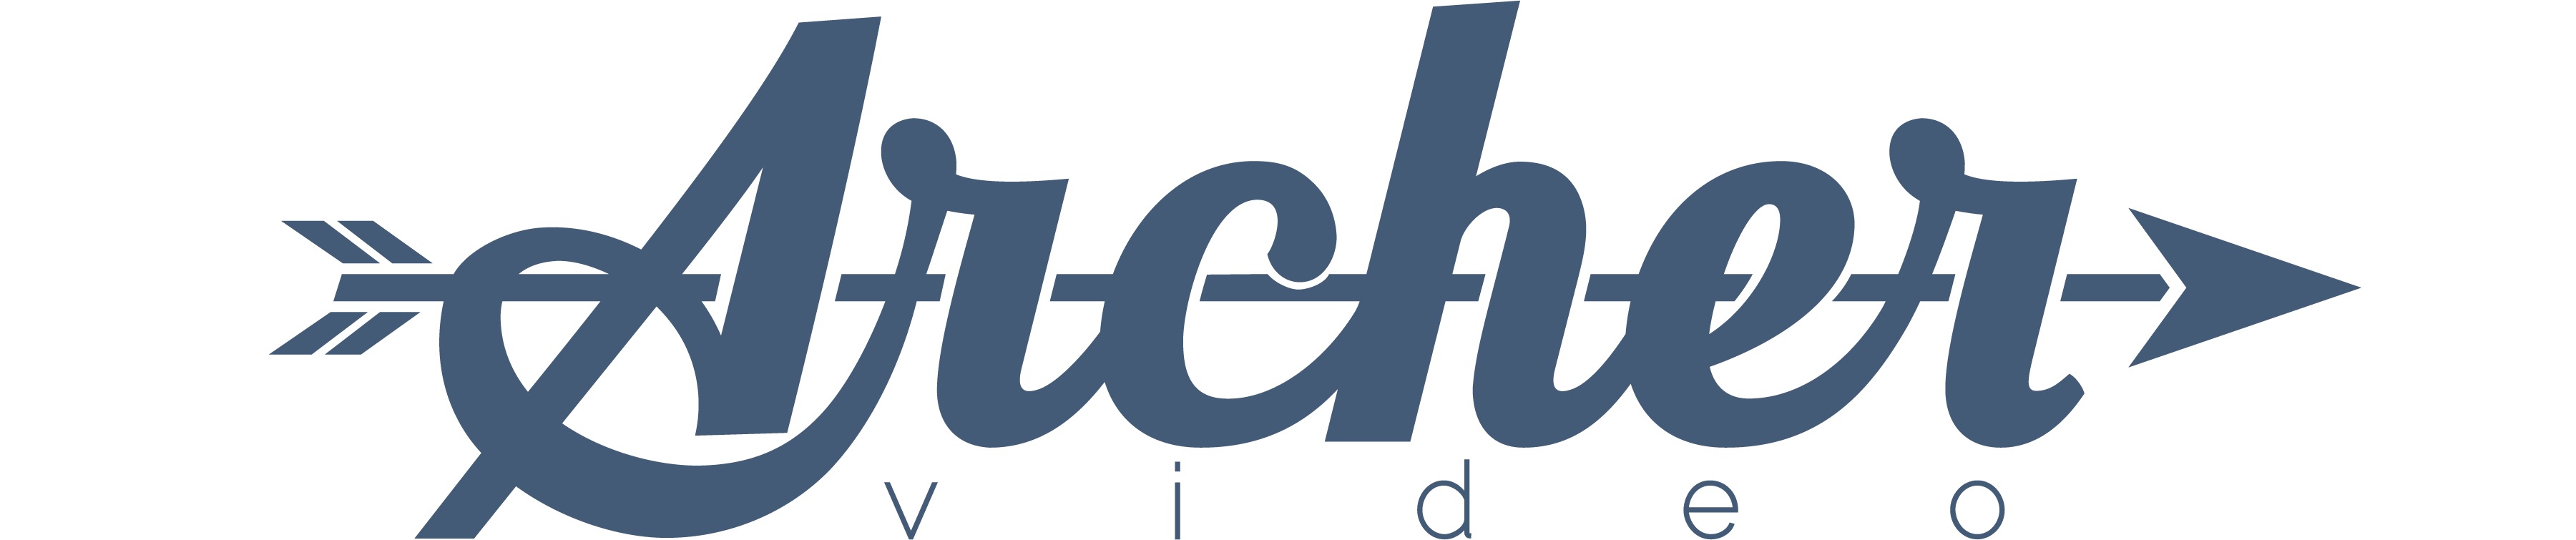 Archer Video Logo